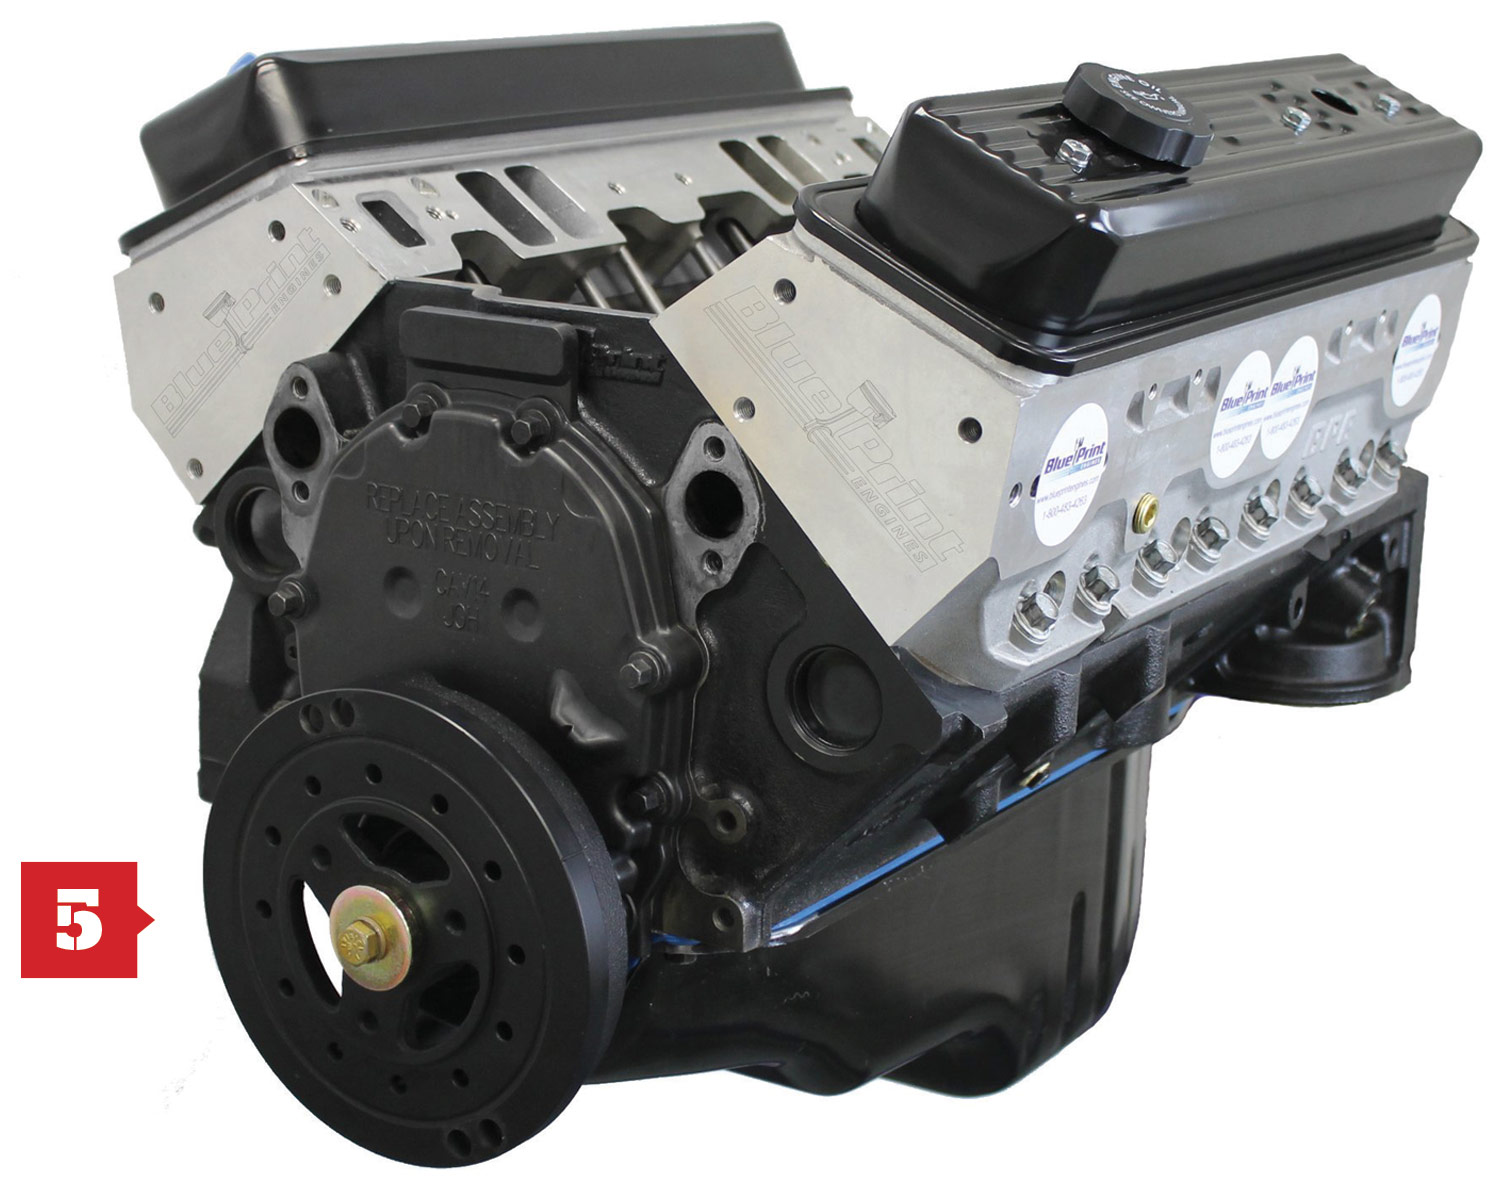 BluePrint Engines' 383ci stroker engine